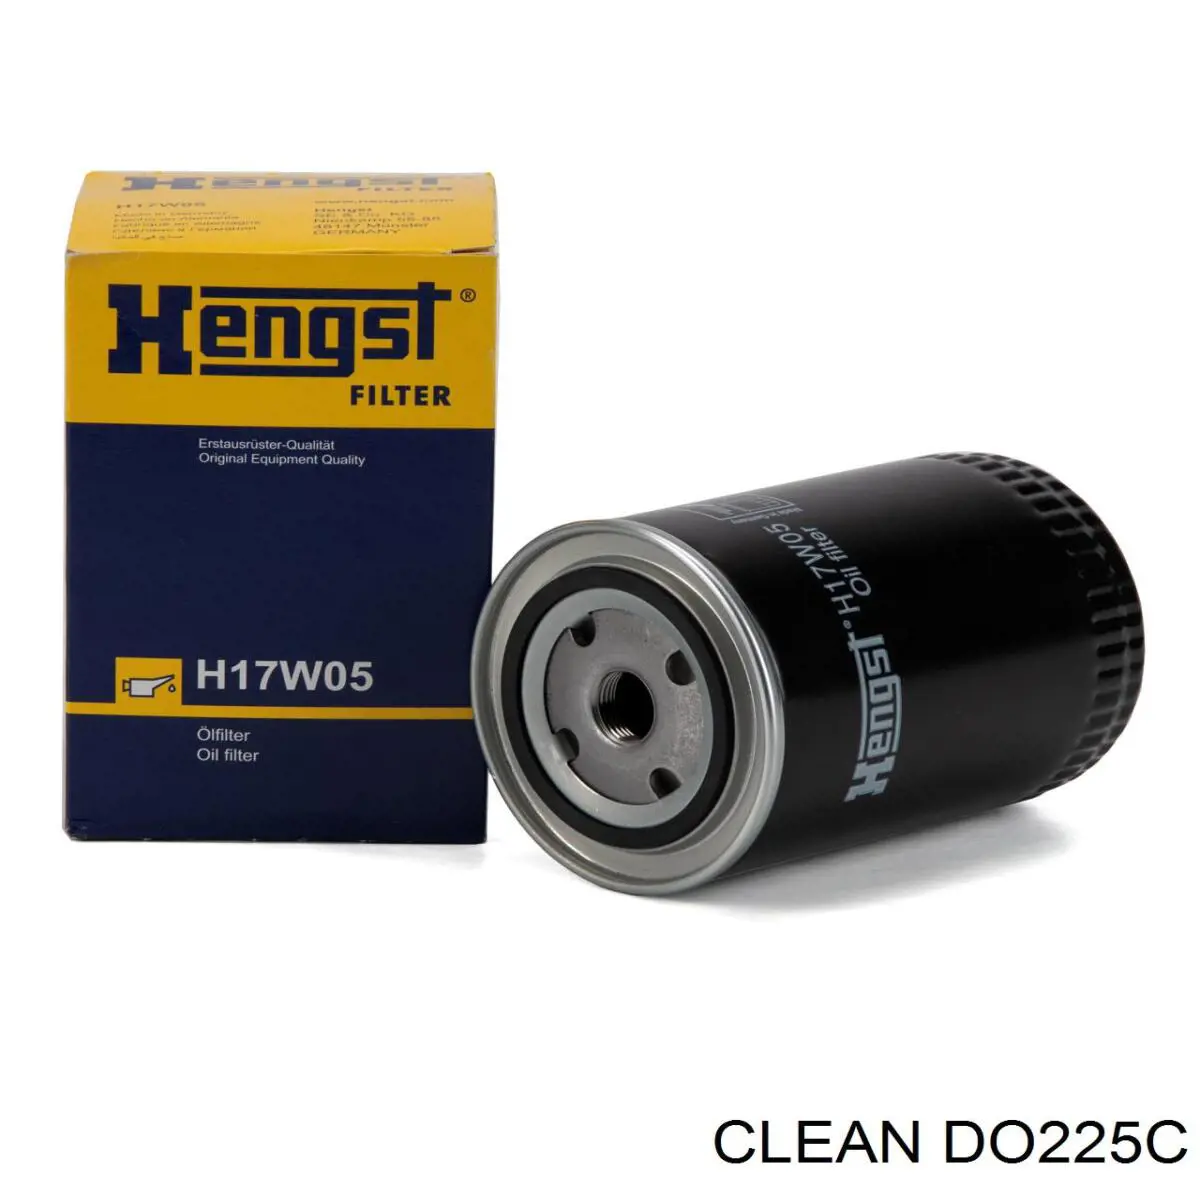 DO225C Clean filtro de aceite